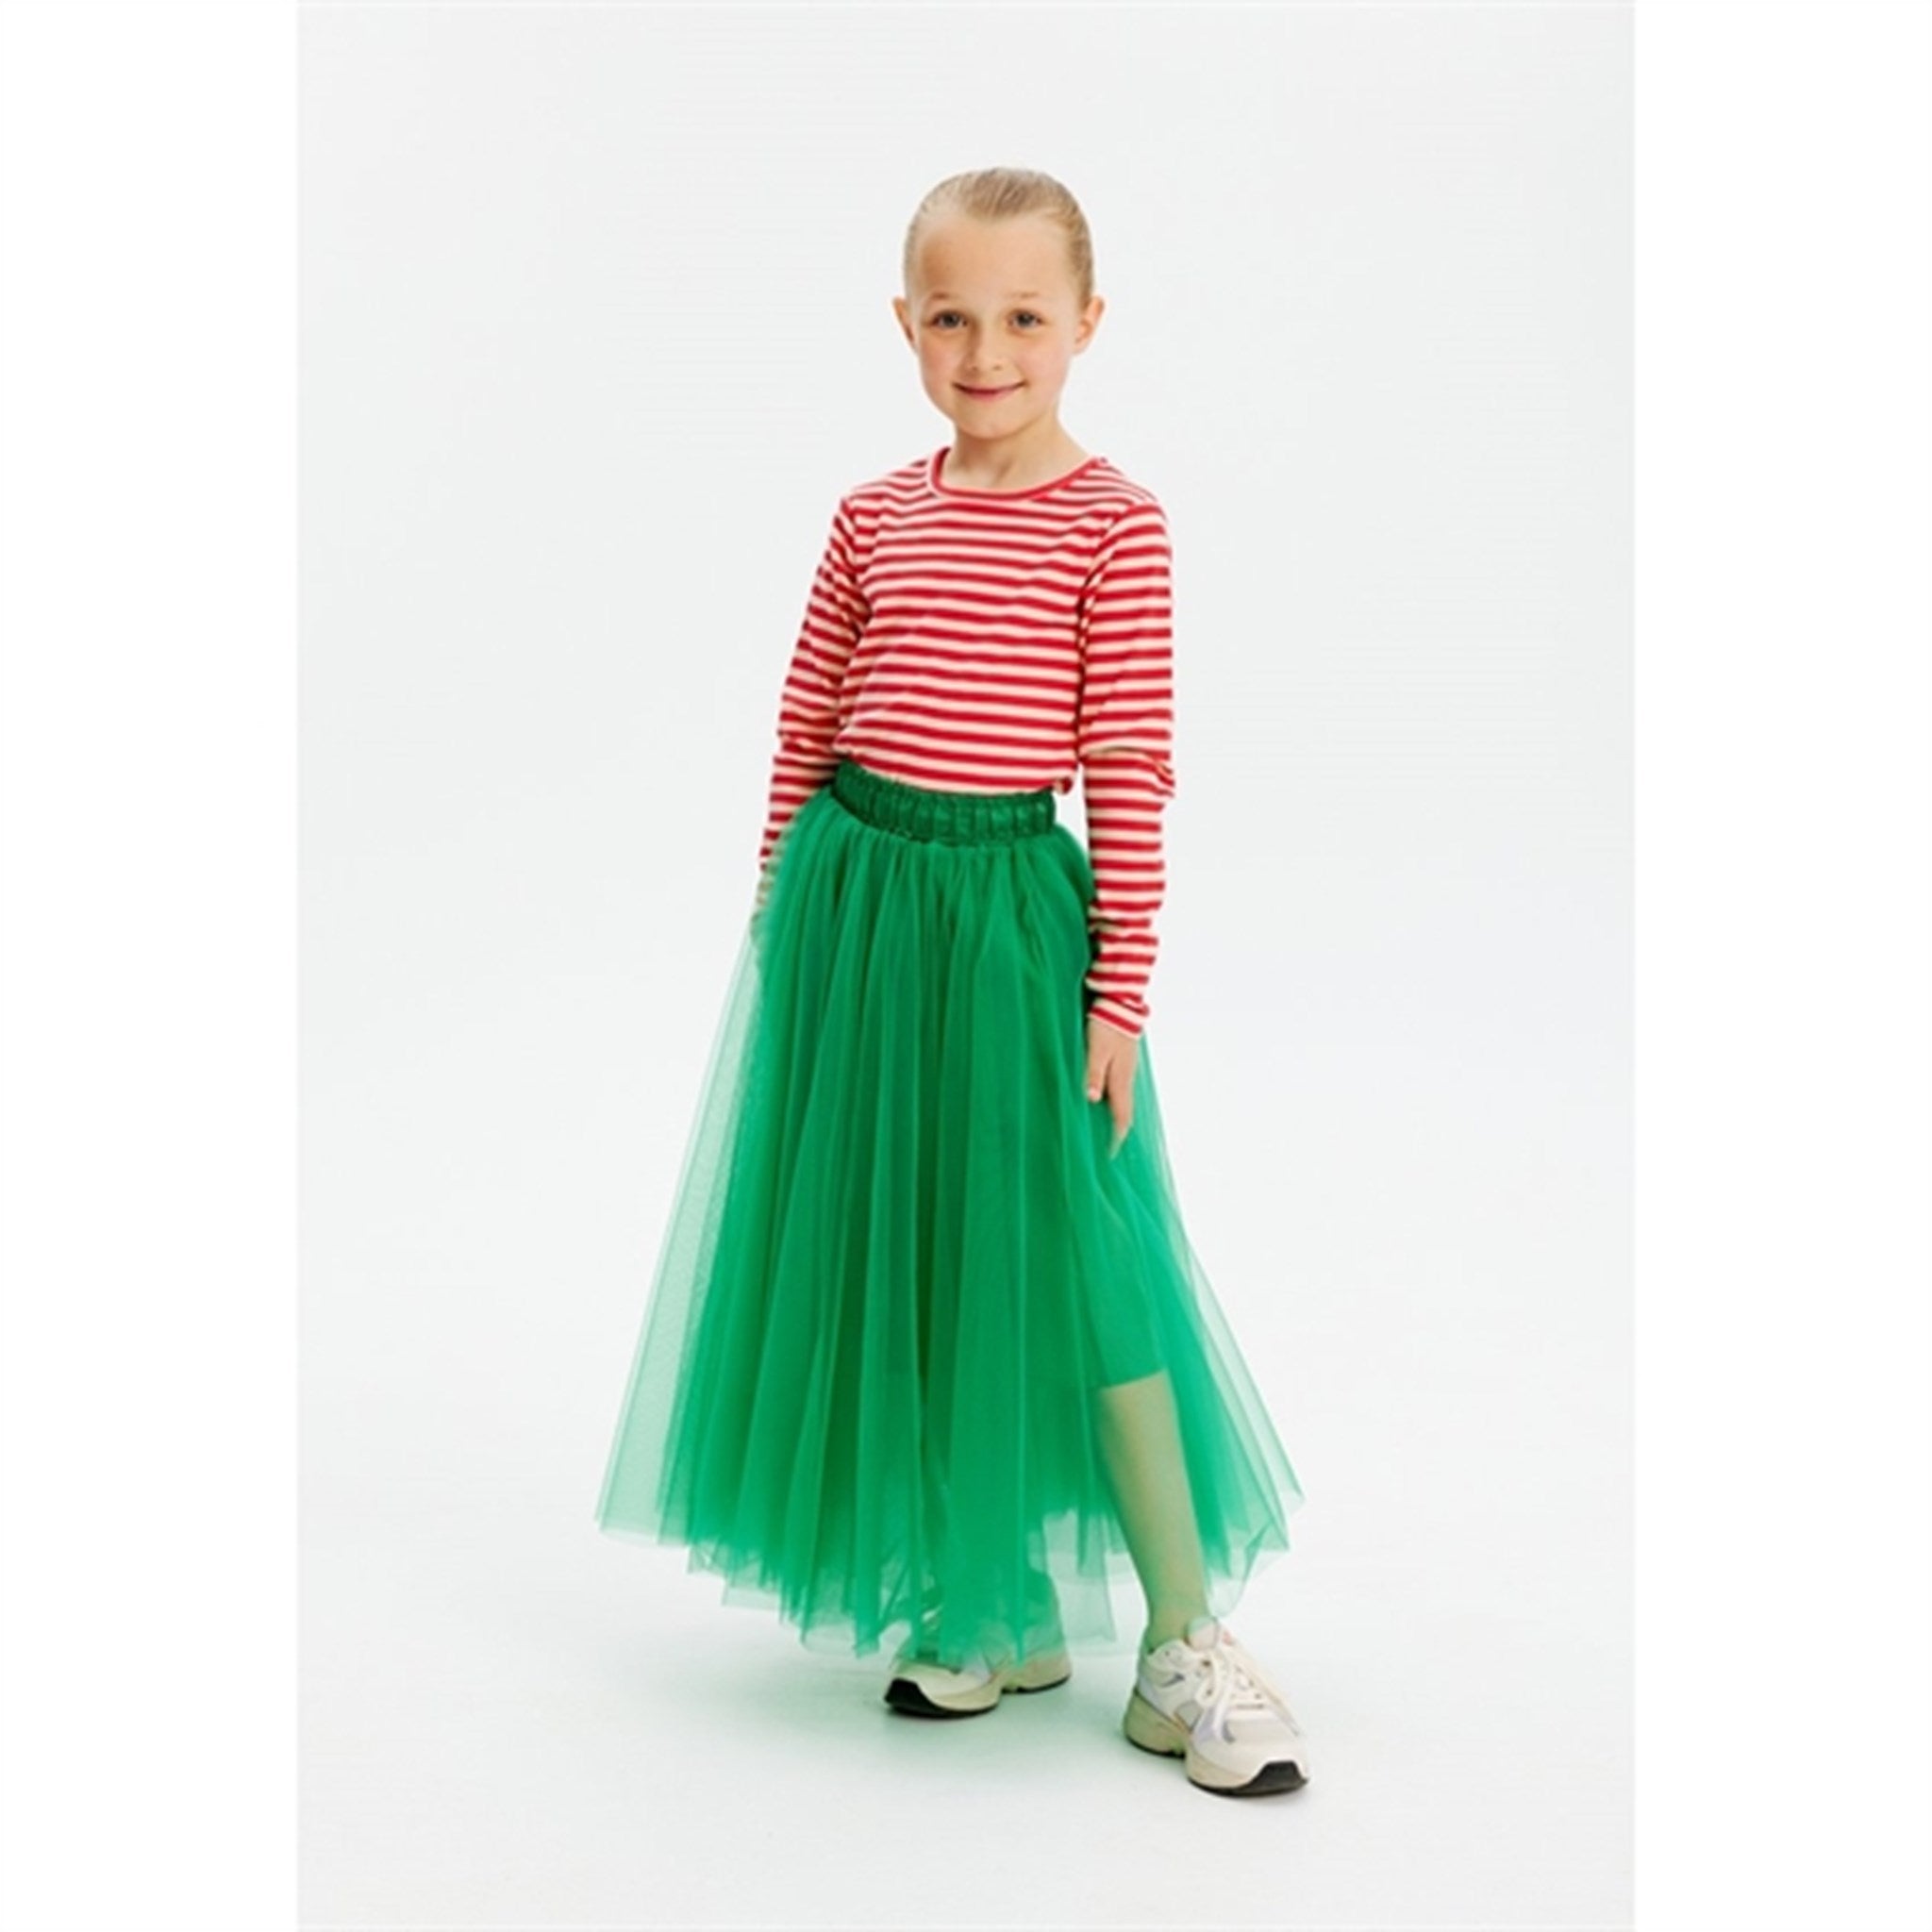 The New Bright Green Heaven Skirt 2